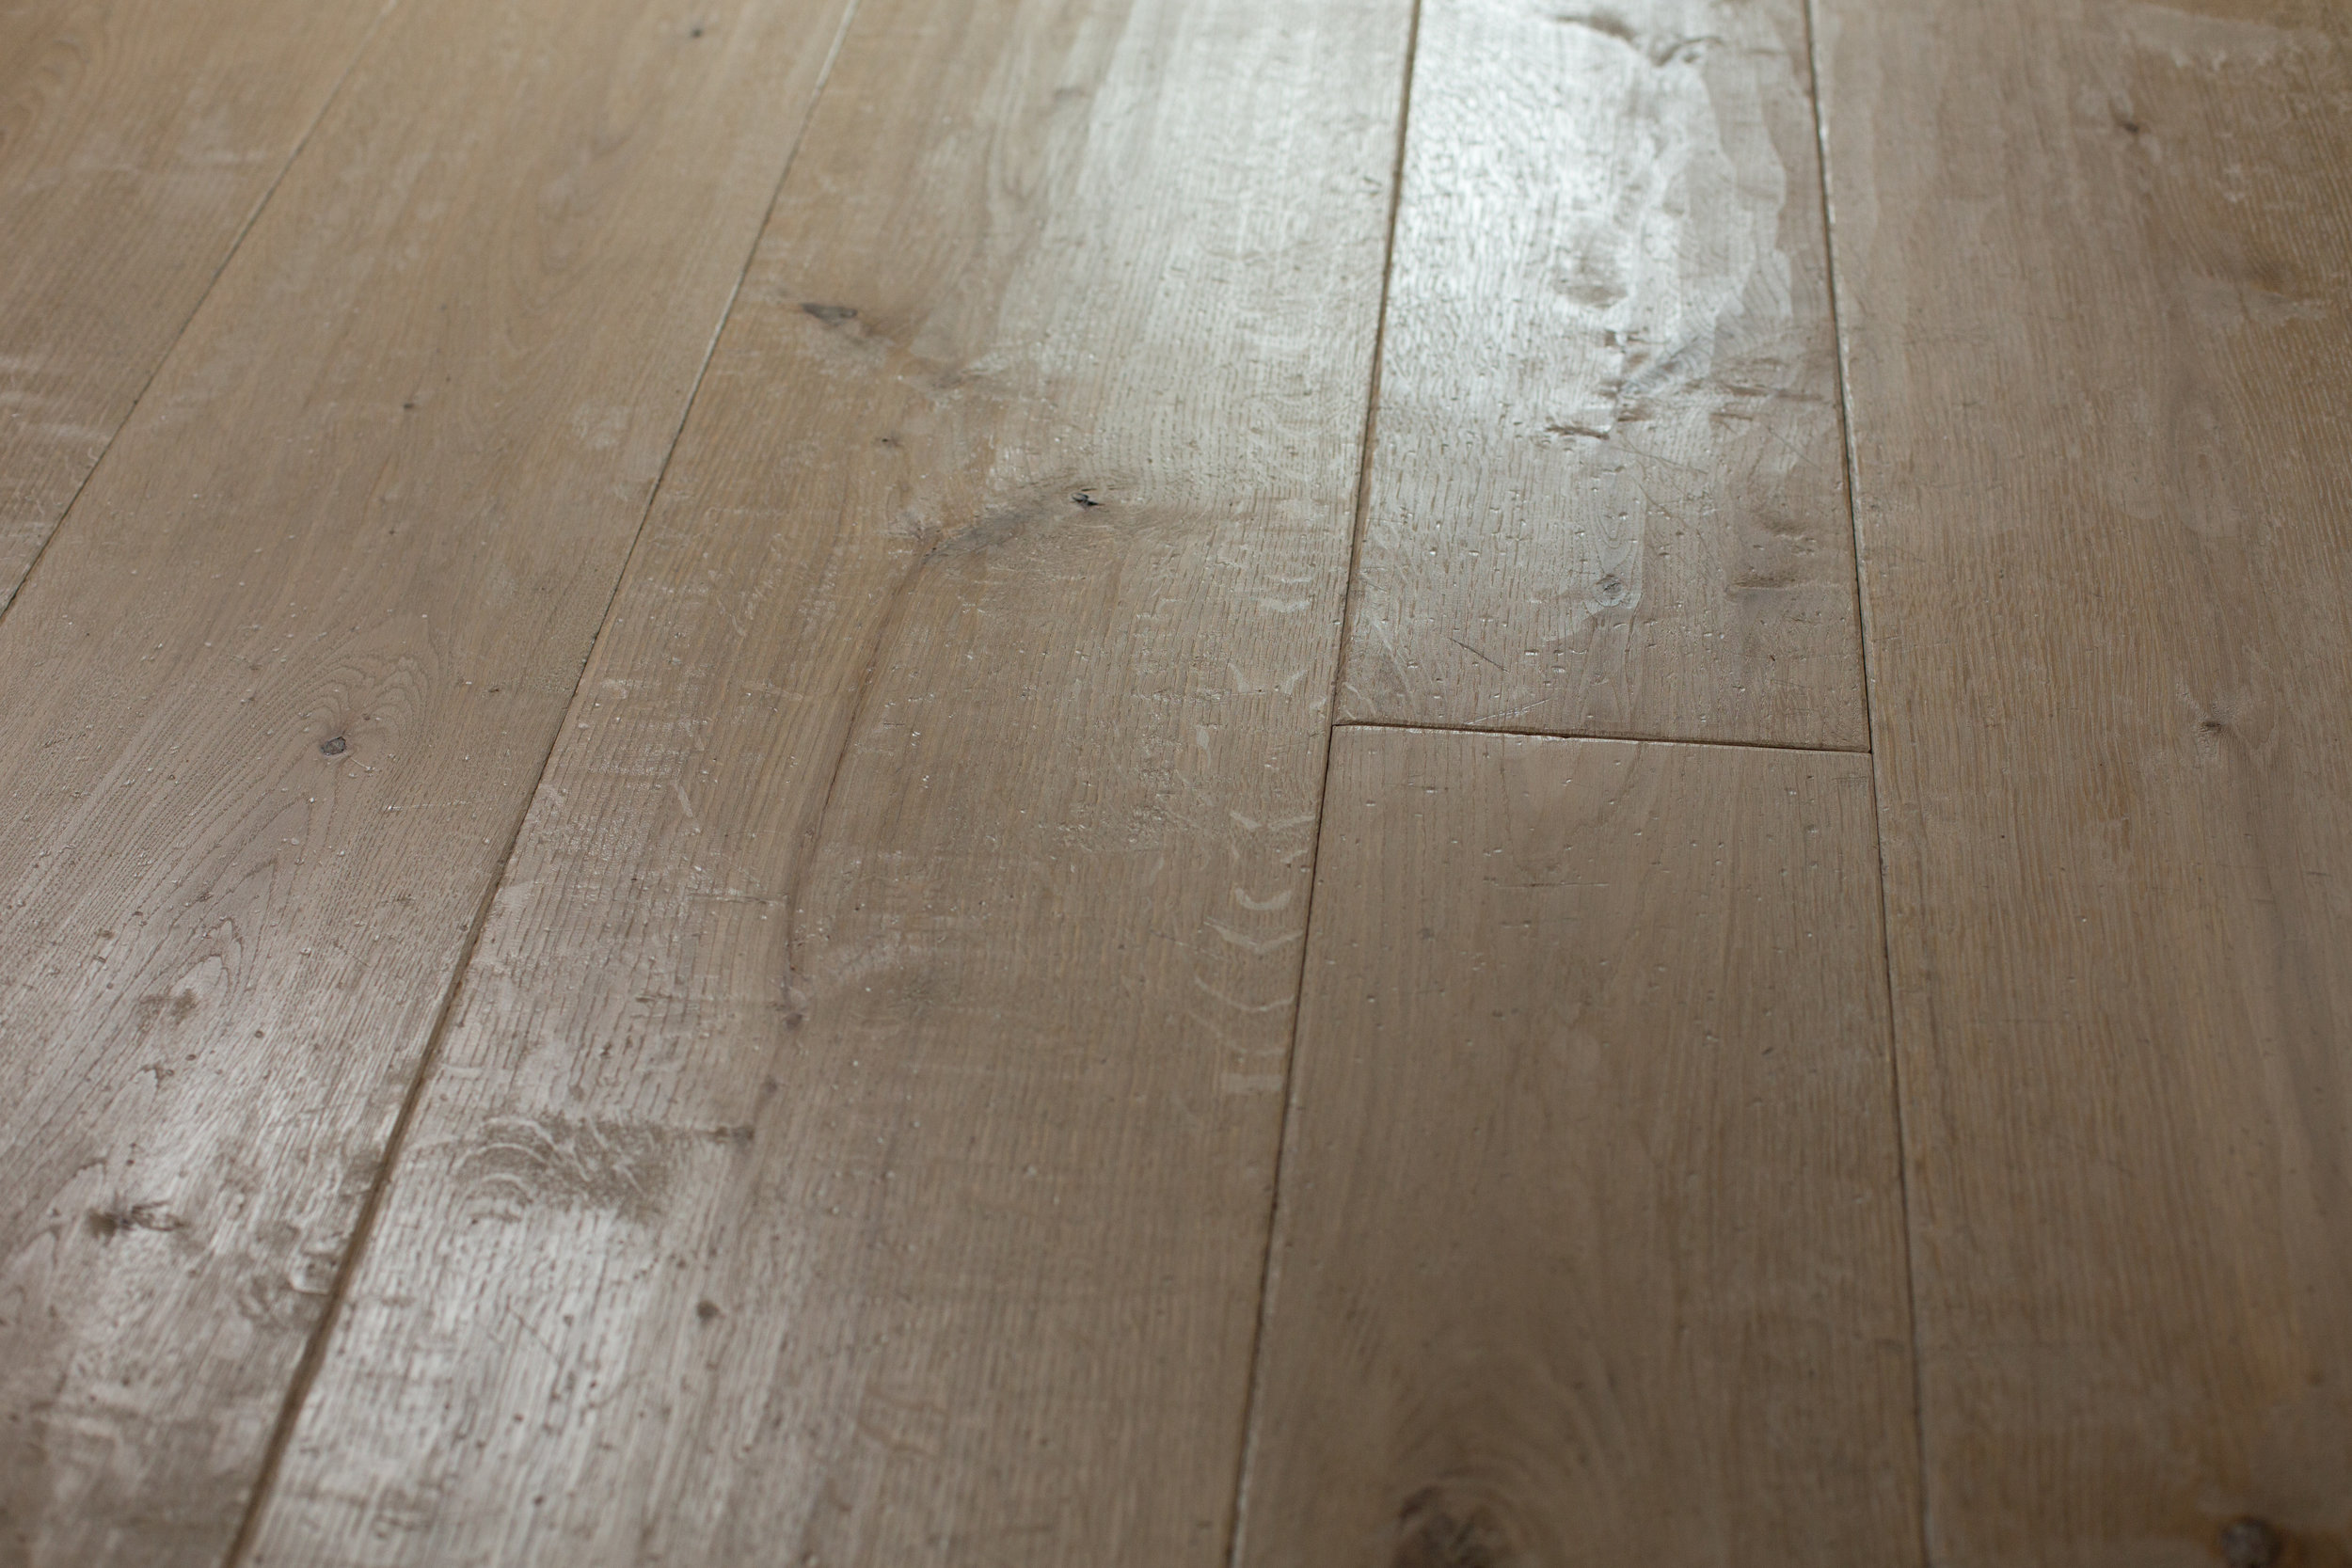 Distressed wood floor